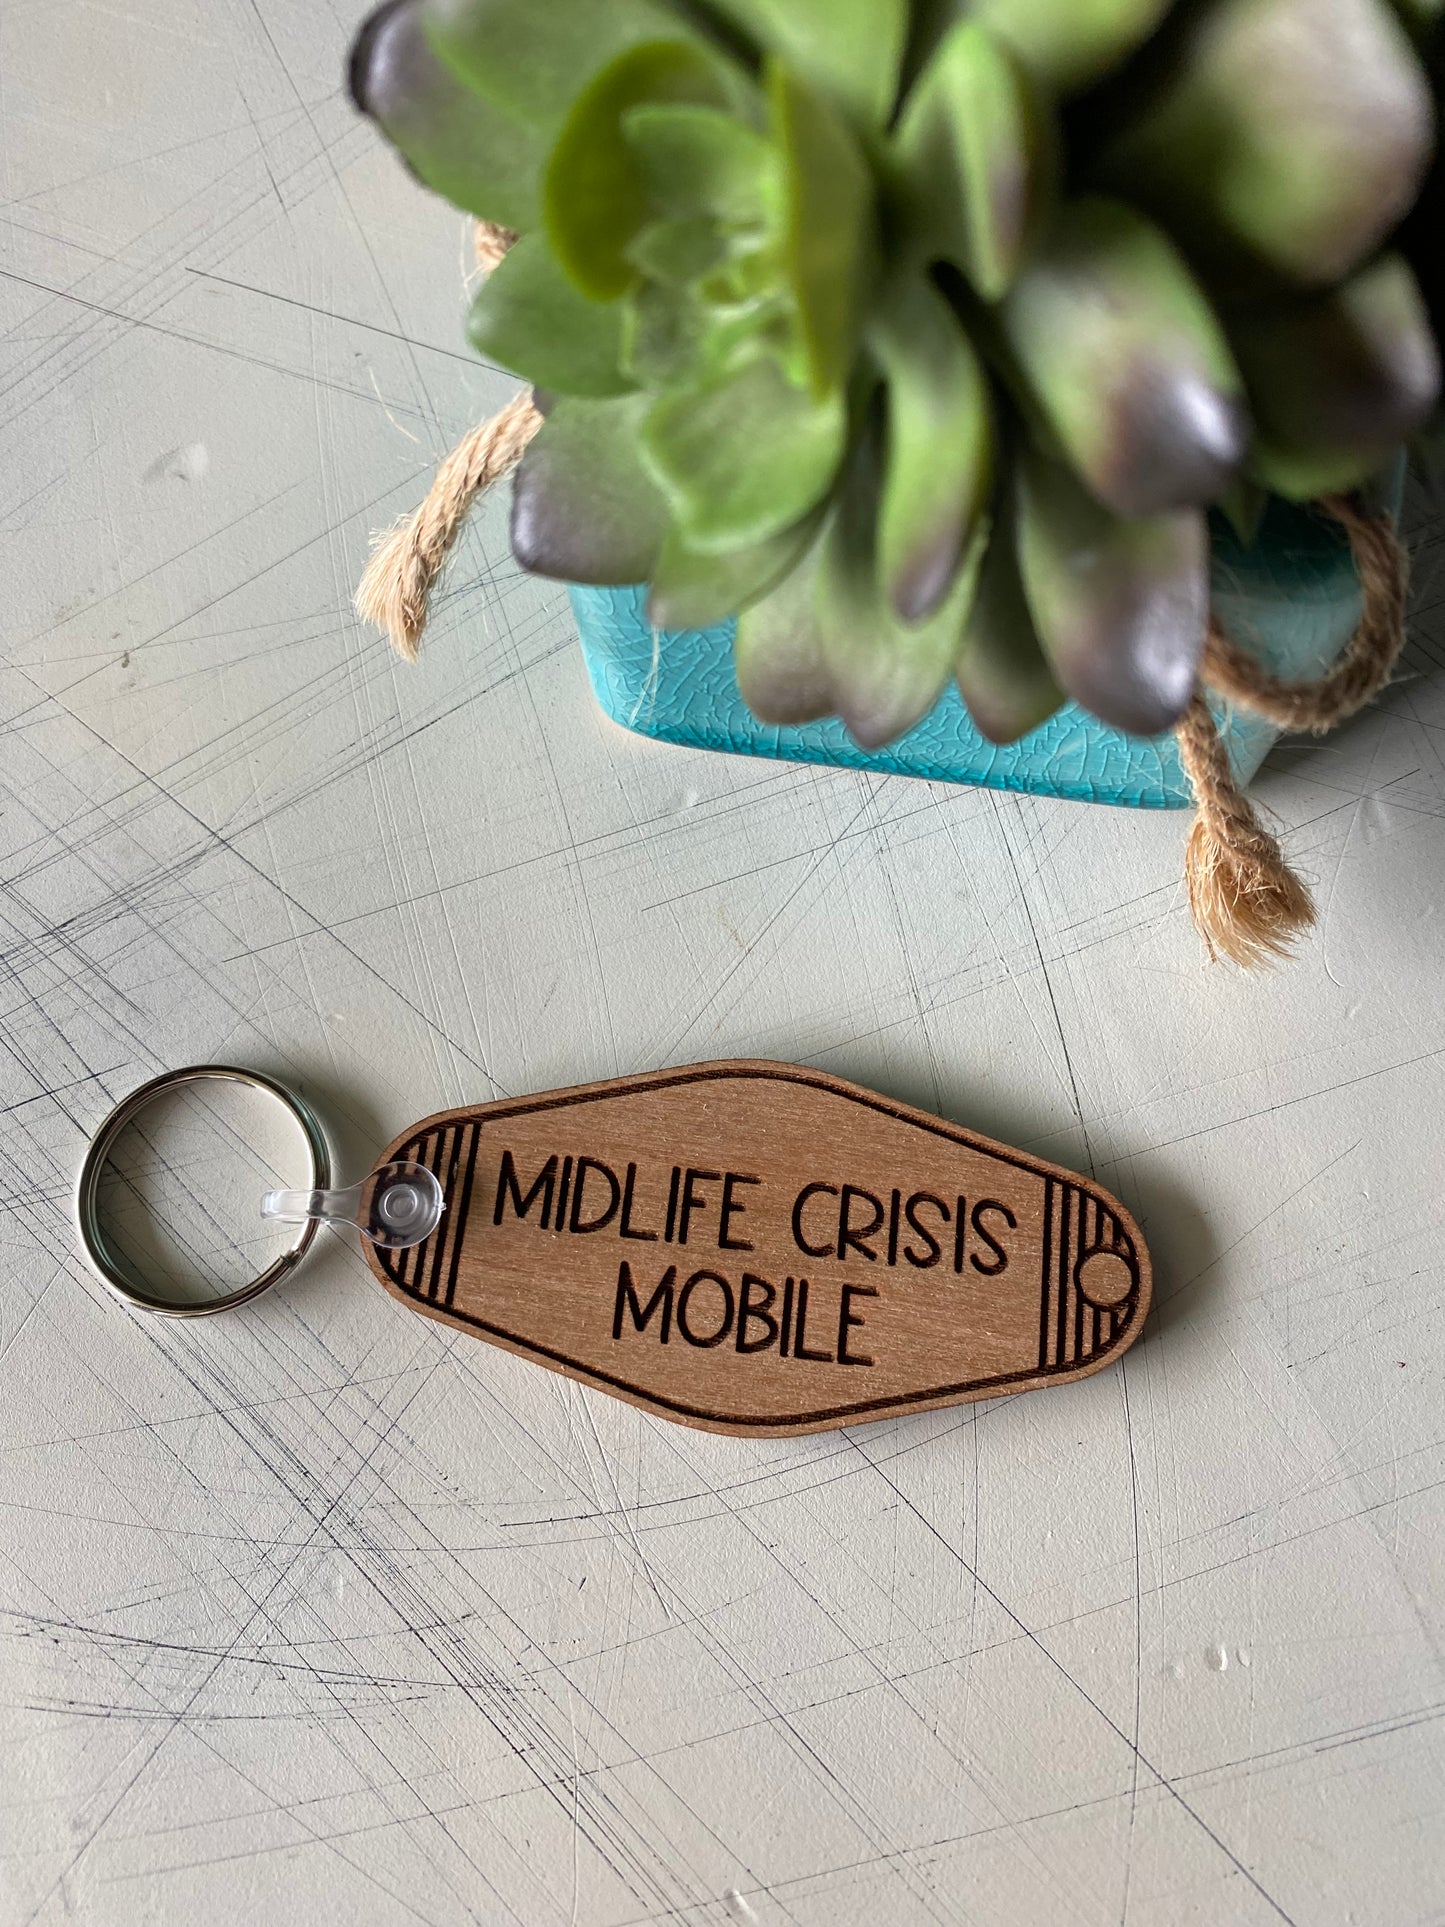 Midlife Crisis Mobile - wood keychain - Novotny Designs - motel style keychain